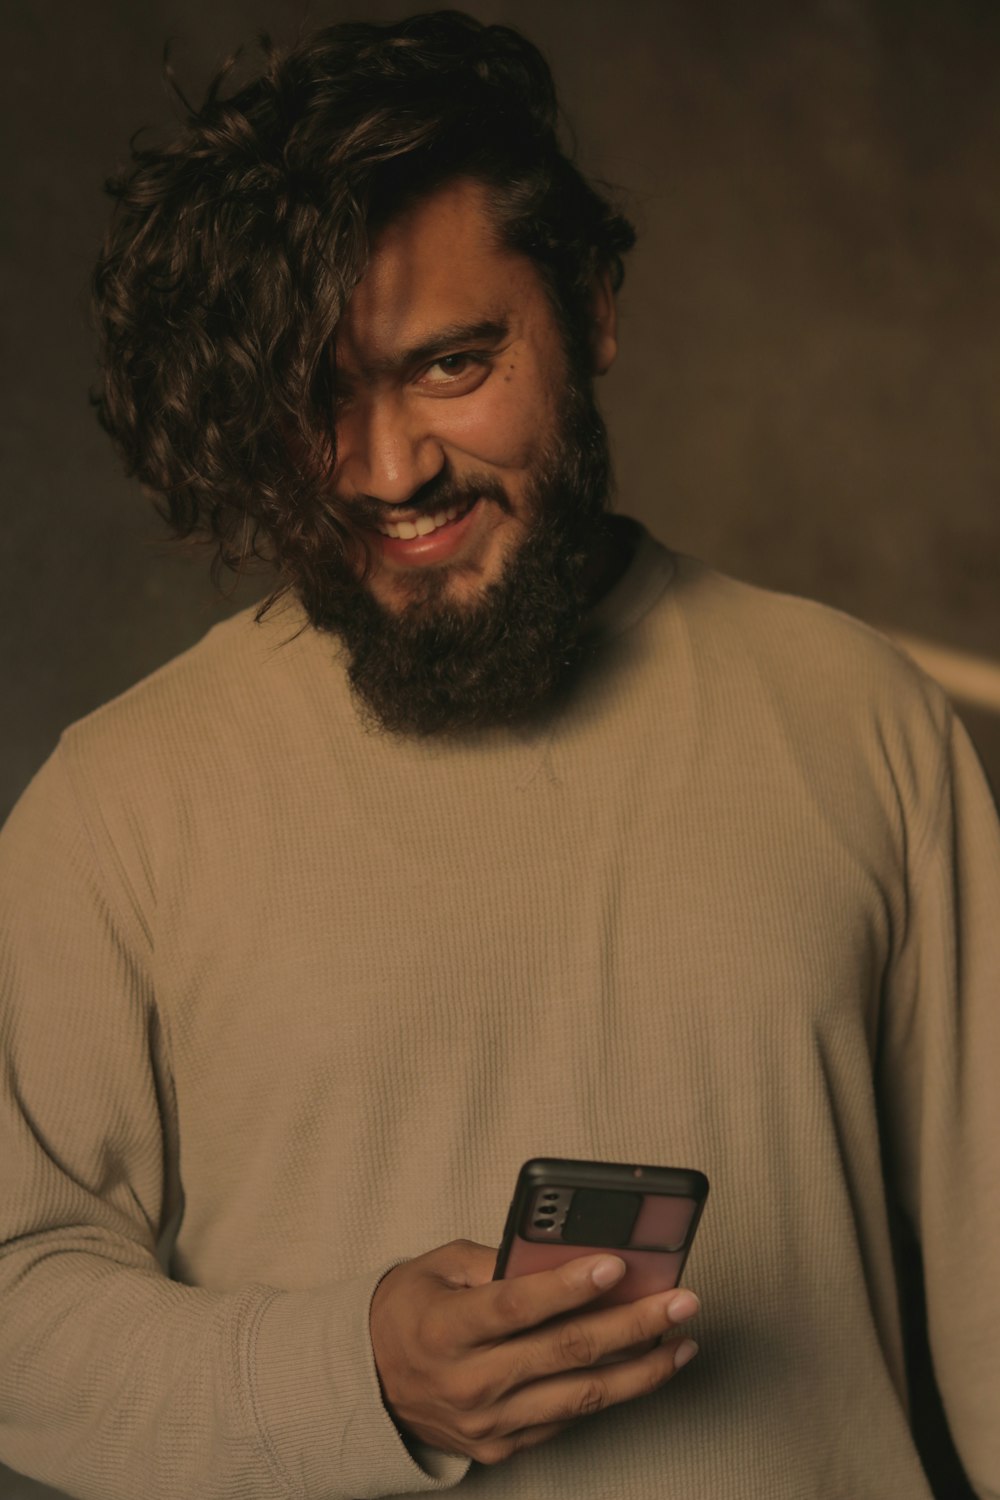 Un hombre con barba sosteniendo un teléfono celular